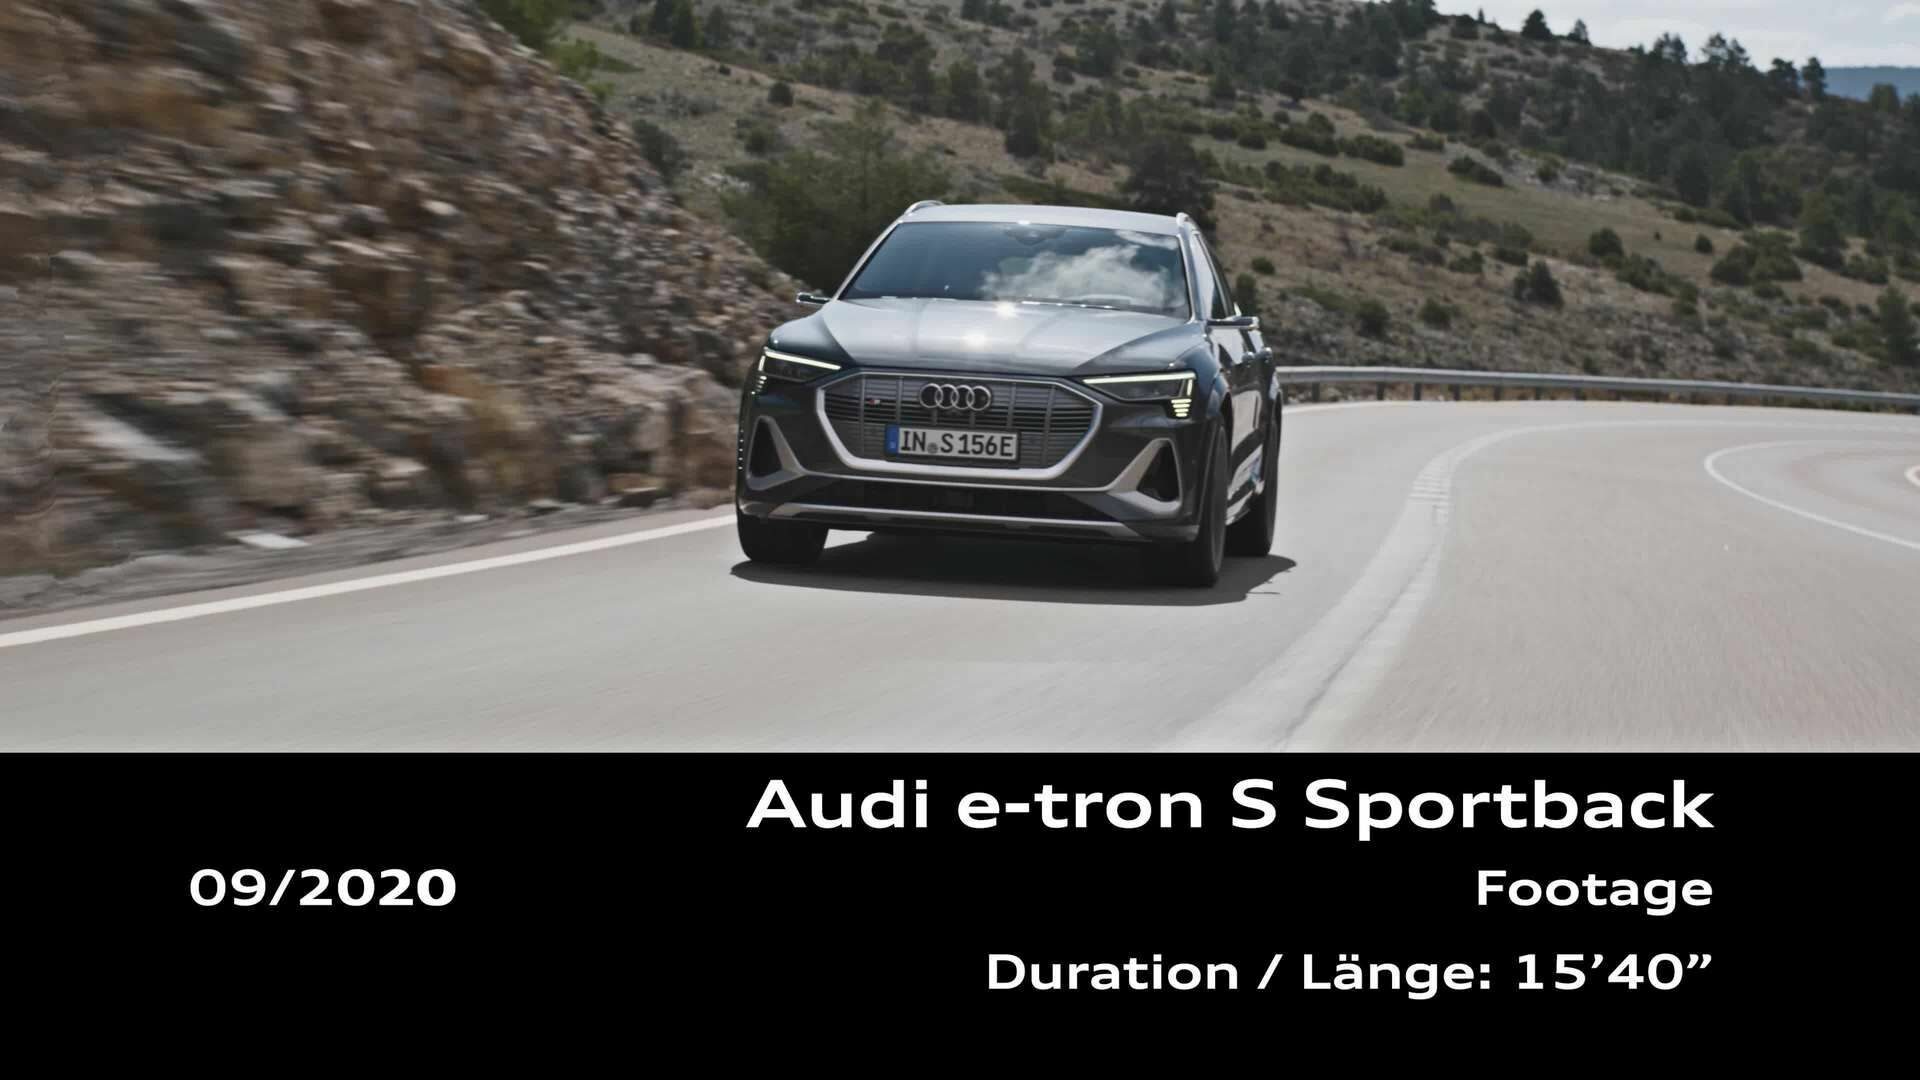 Footage: Audi e-tron S Sportback